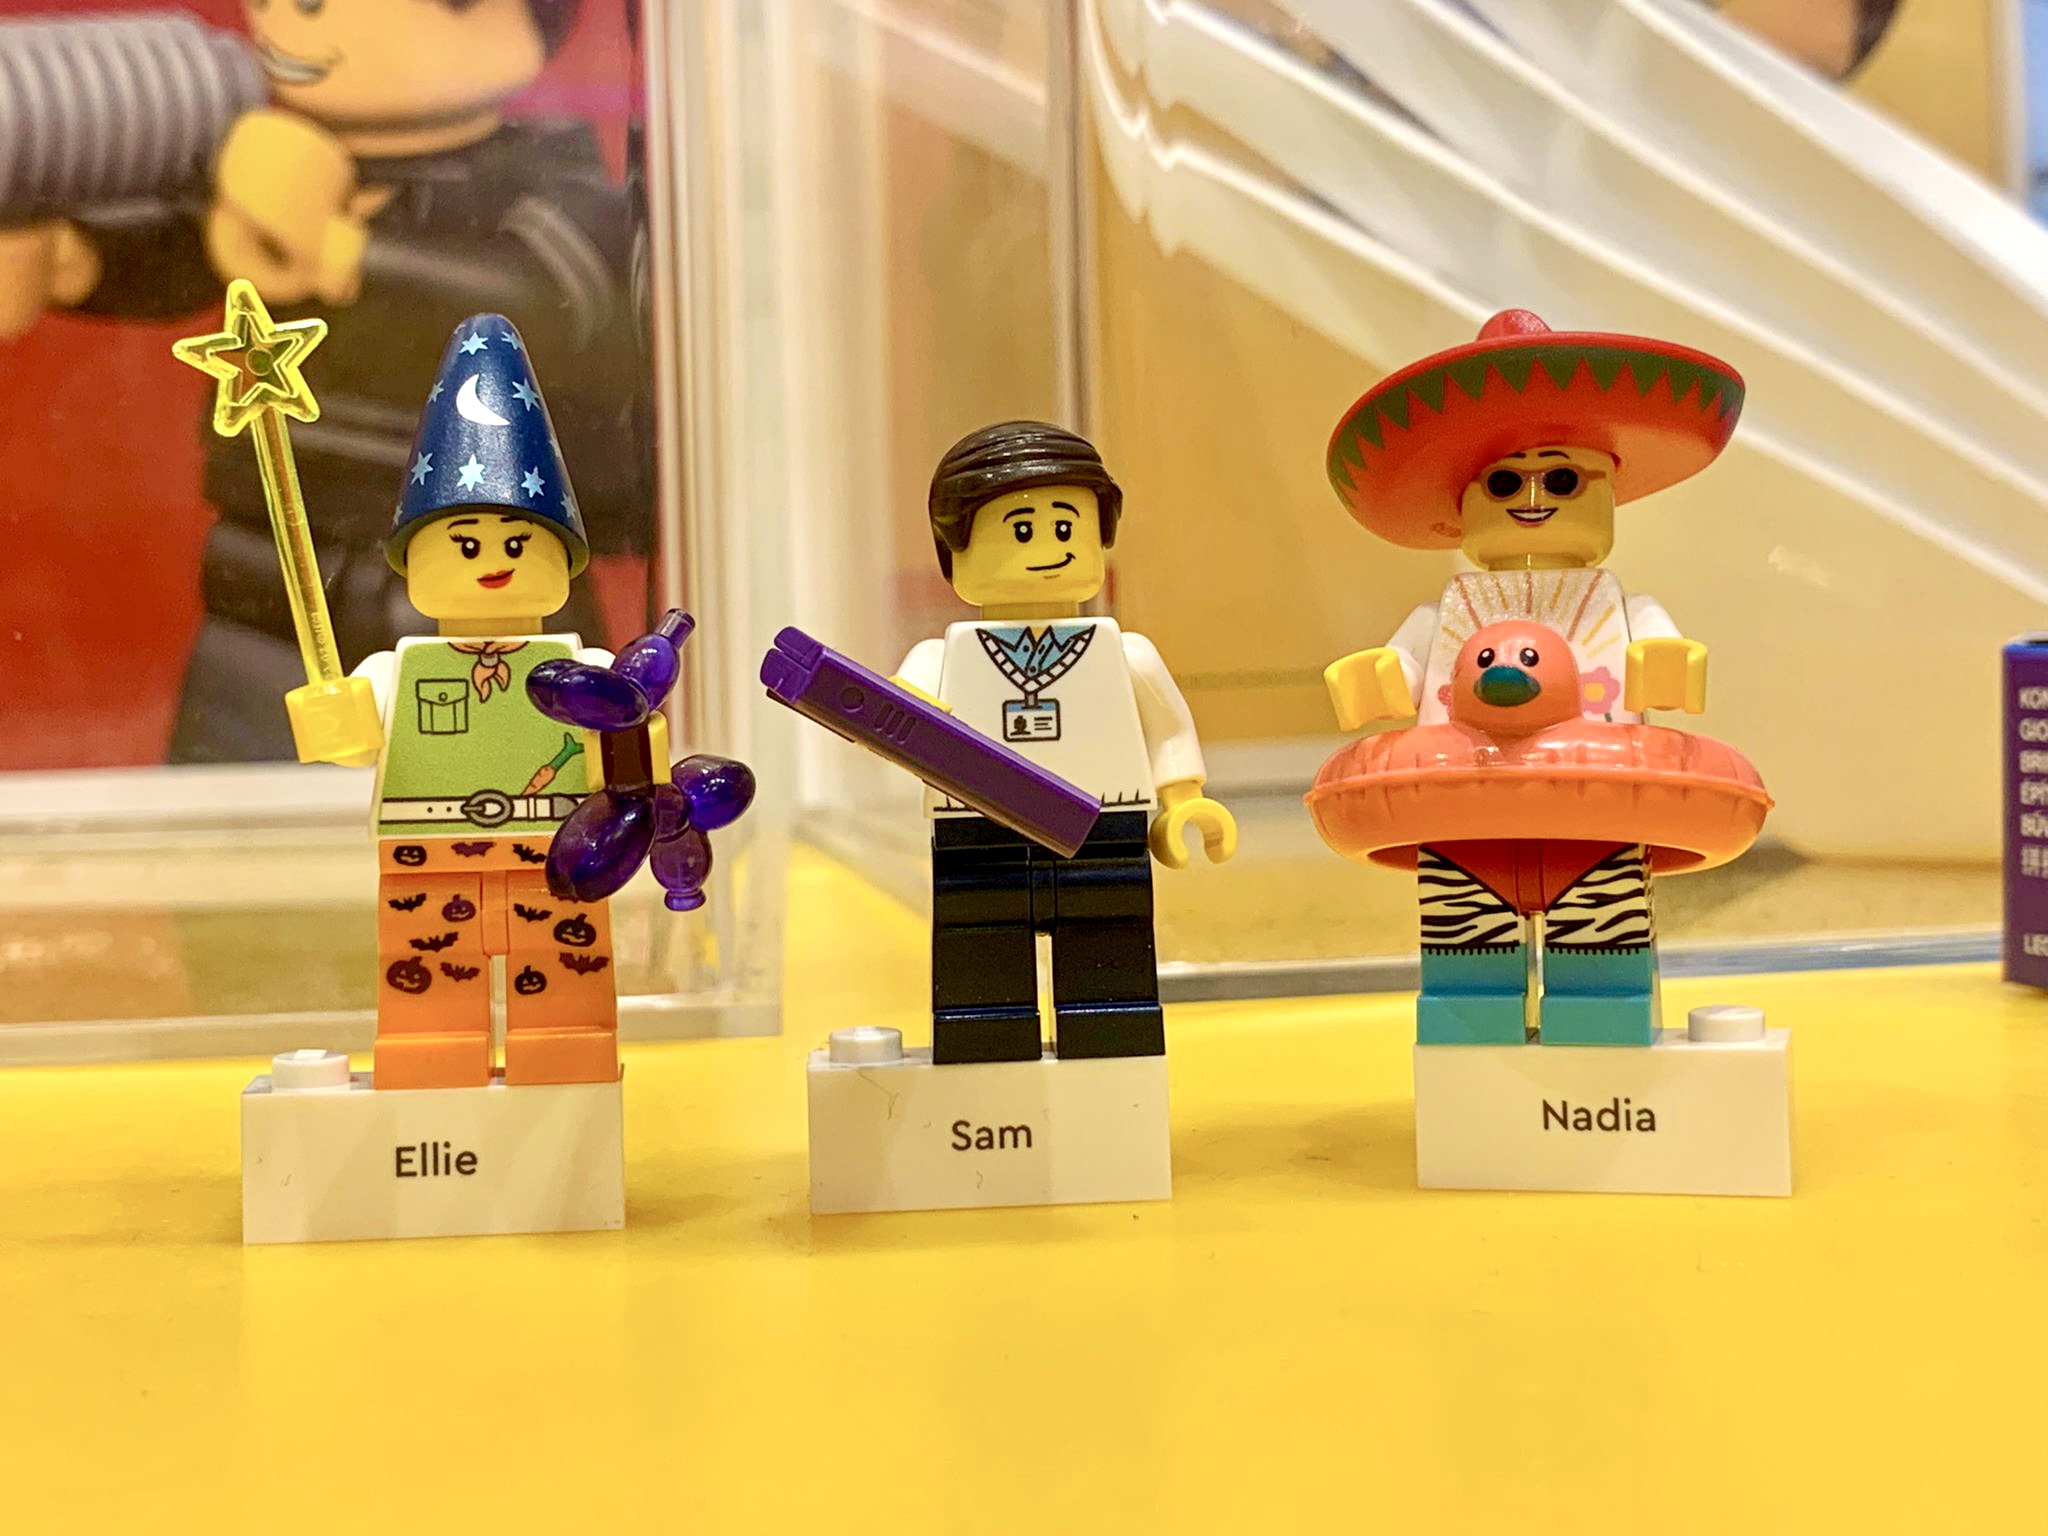 Lego mini figures of Ellie, Sam and Nadia